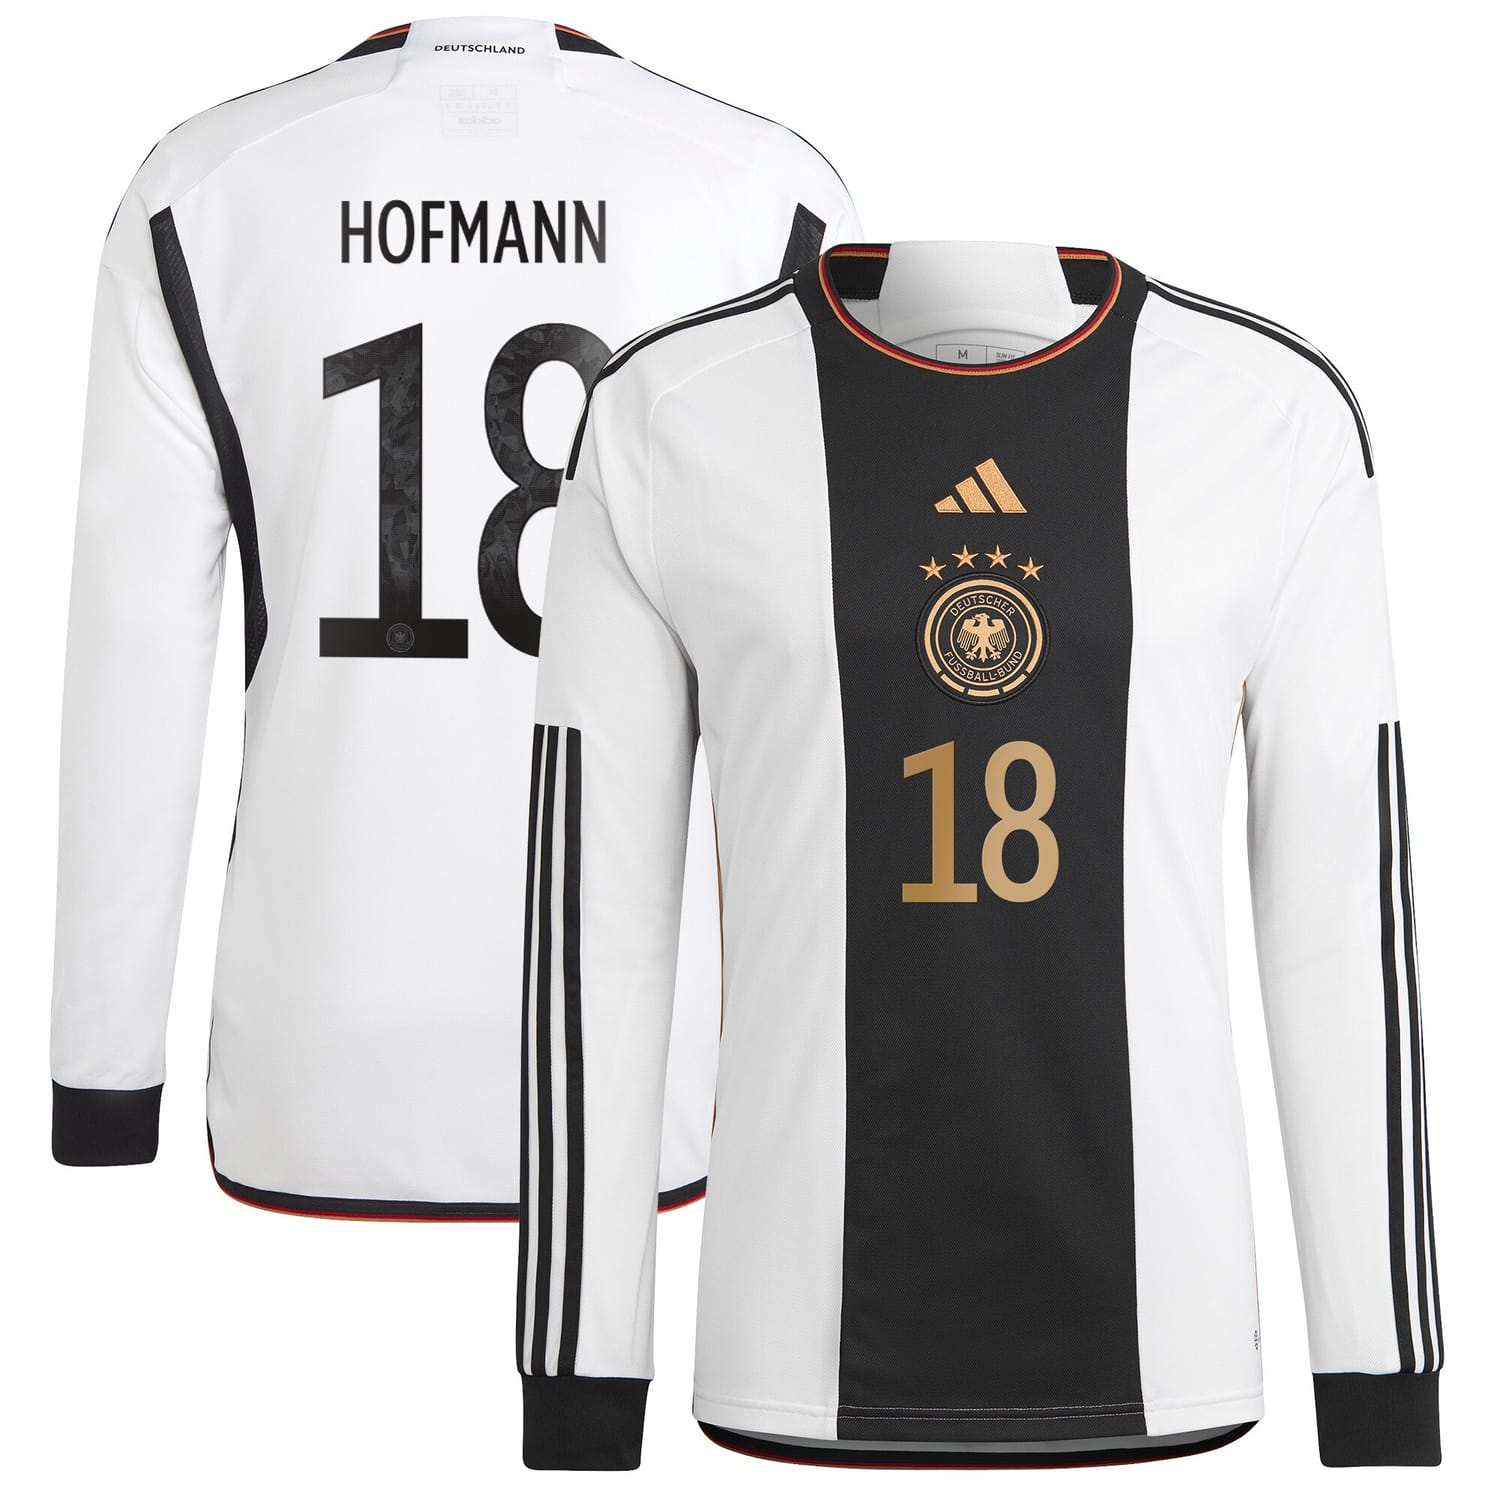 Germany National Team Home Jersey Shirt Long Sleeve player Jonas Hofmann 18 printing for Men